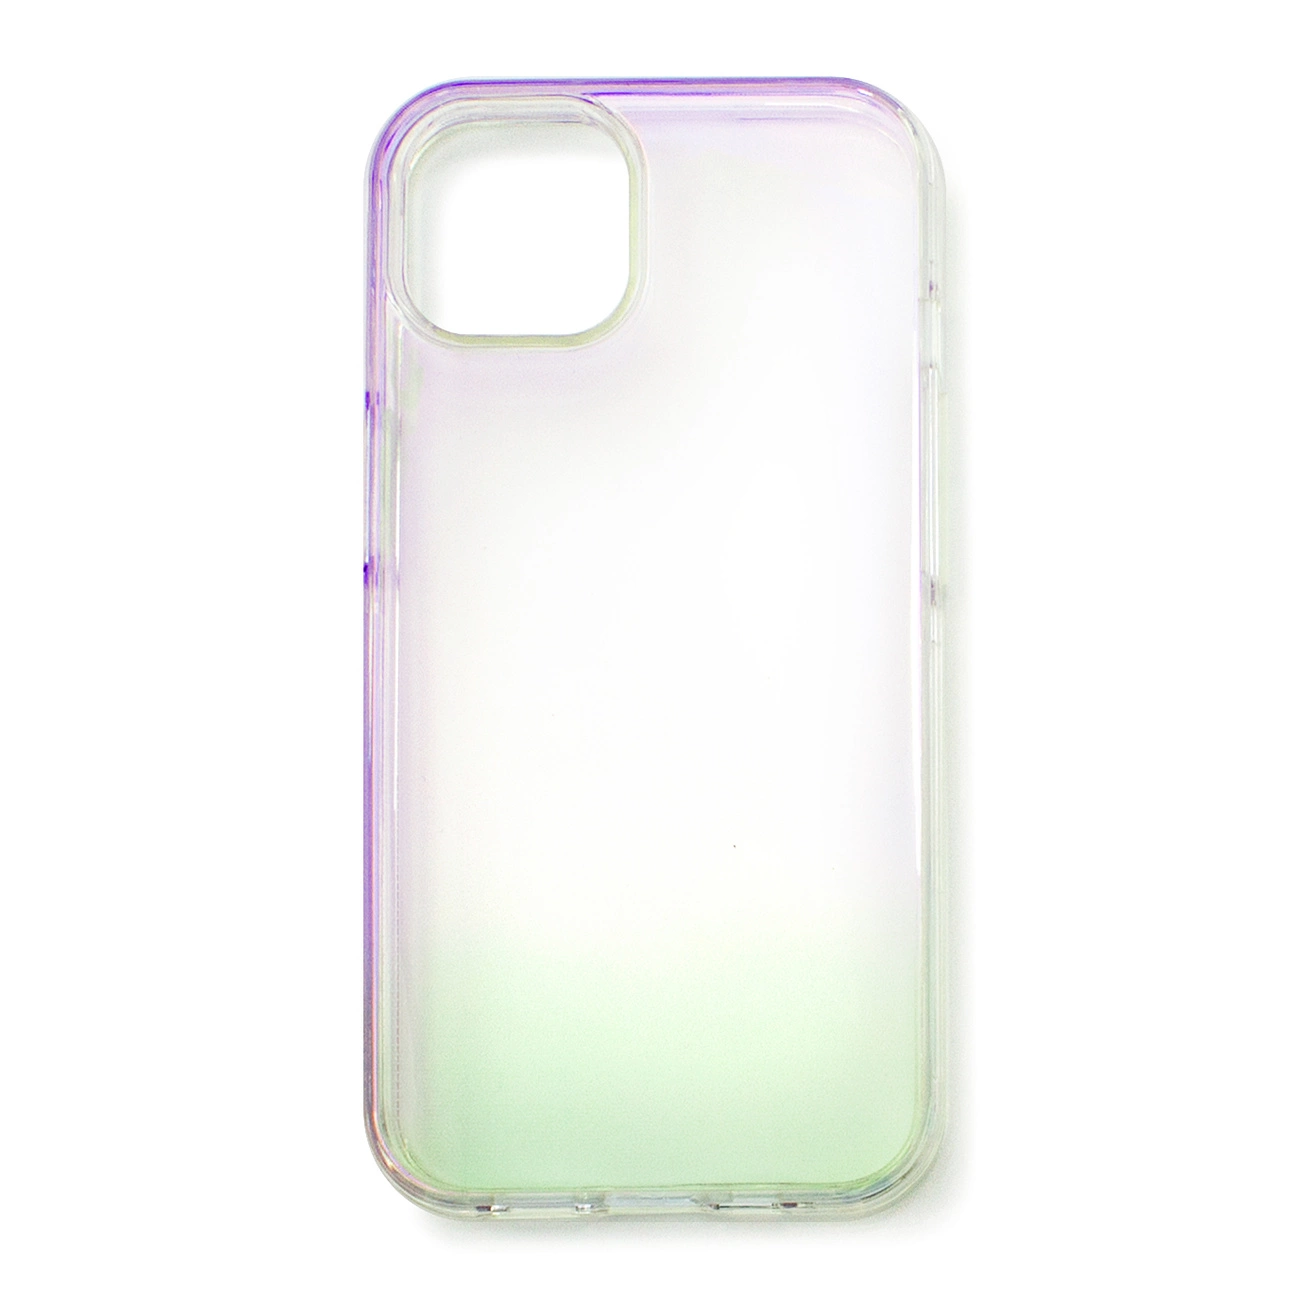 Hurtel Pouzdro Aurora pro iPhone 13 Pro Max gelové duhové fialové pouzdro